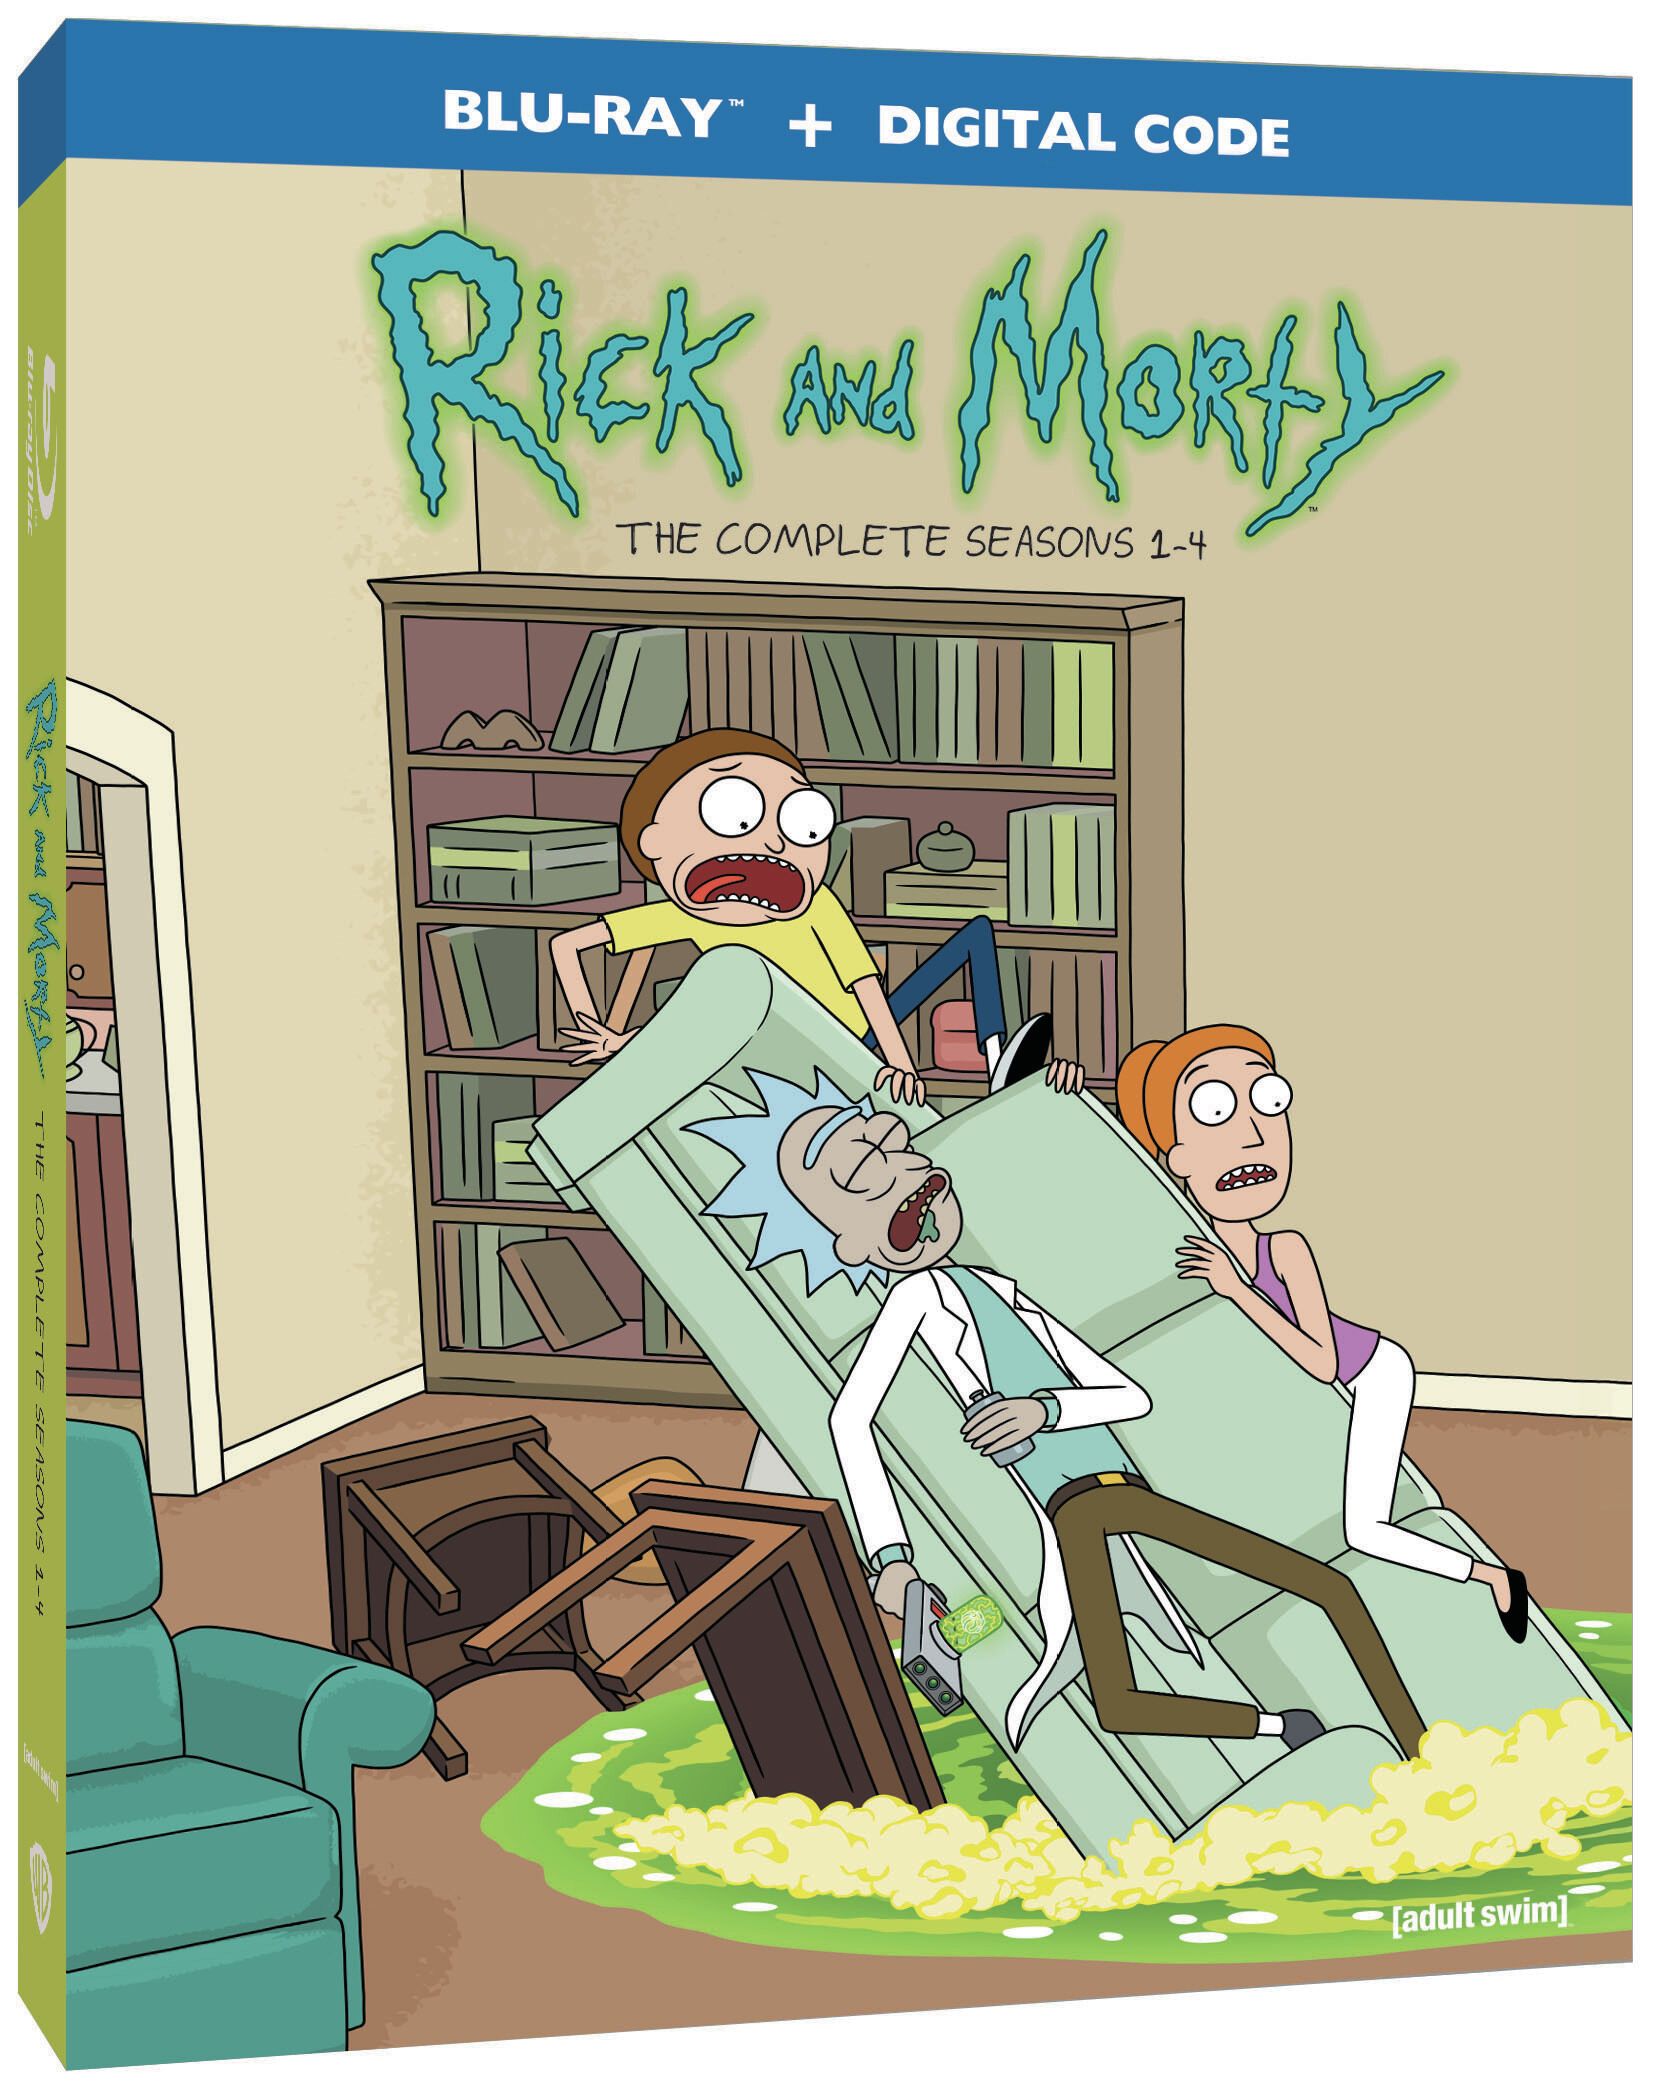 Rick and Morty ประกาศวันวางจำหน่าย Blu-ray สำหรับซีซัน 1-4